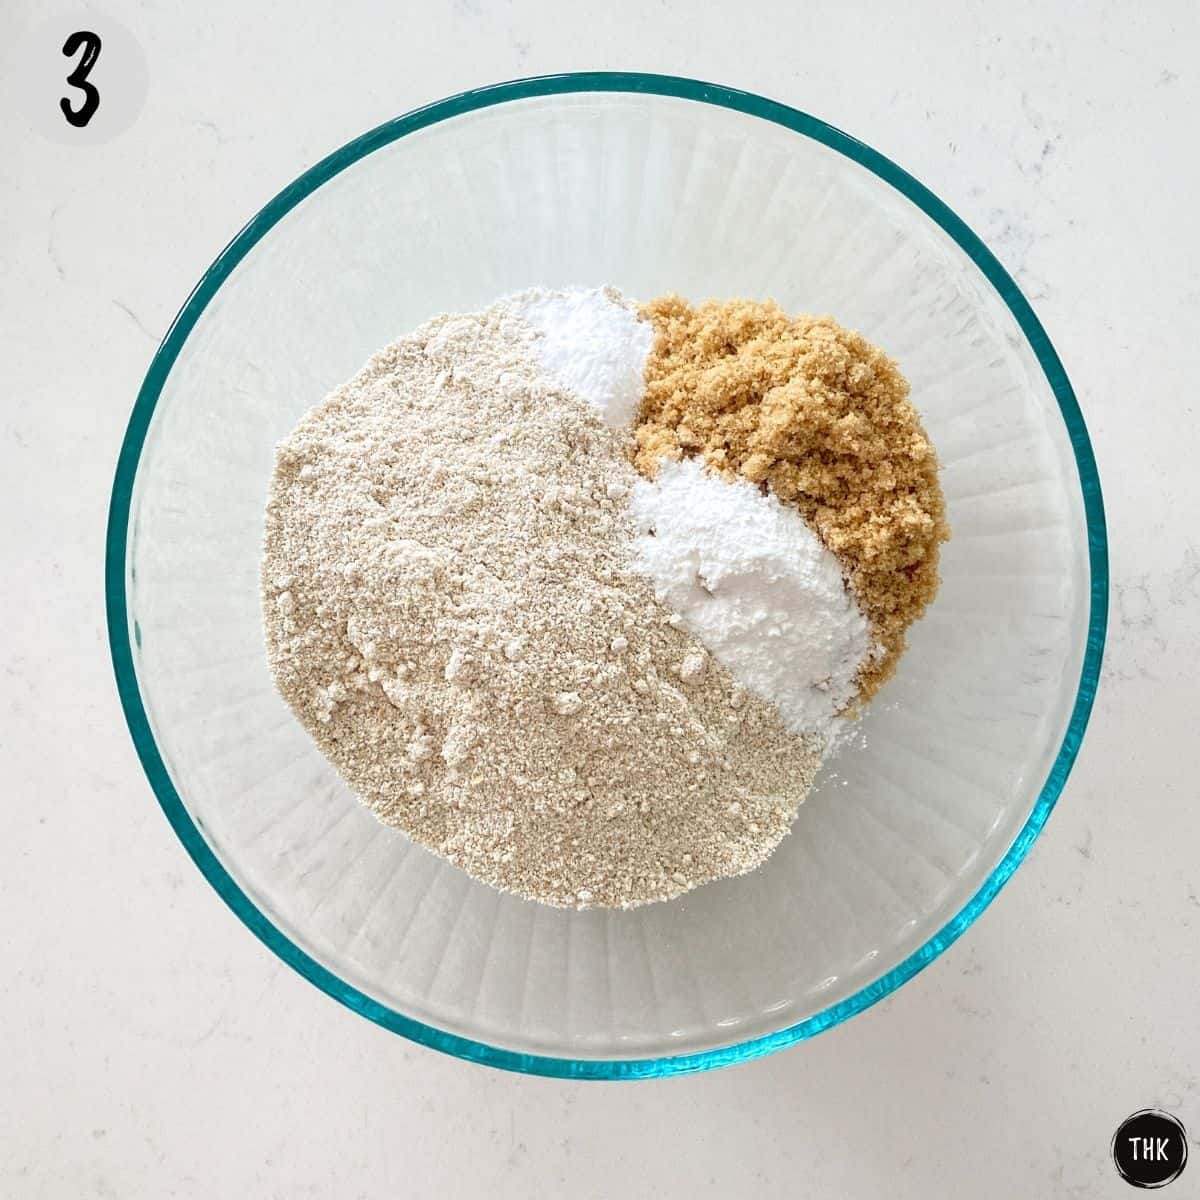 Mixing bowl with oat flour, baking powder, baking soda and brown sugar inside.